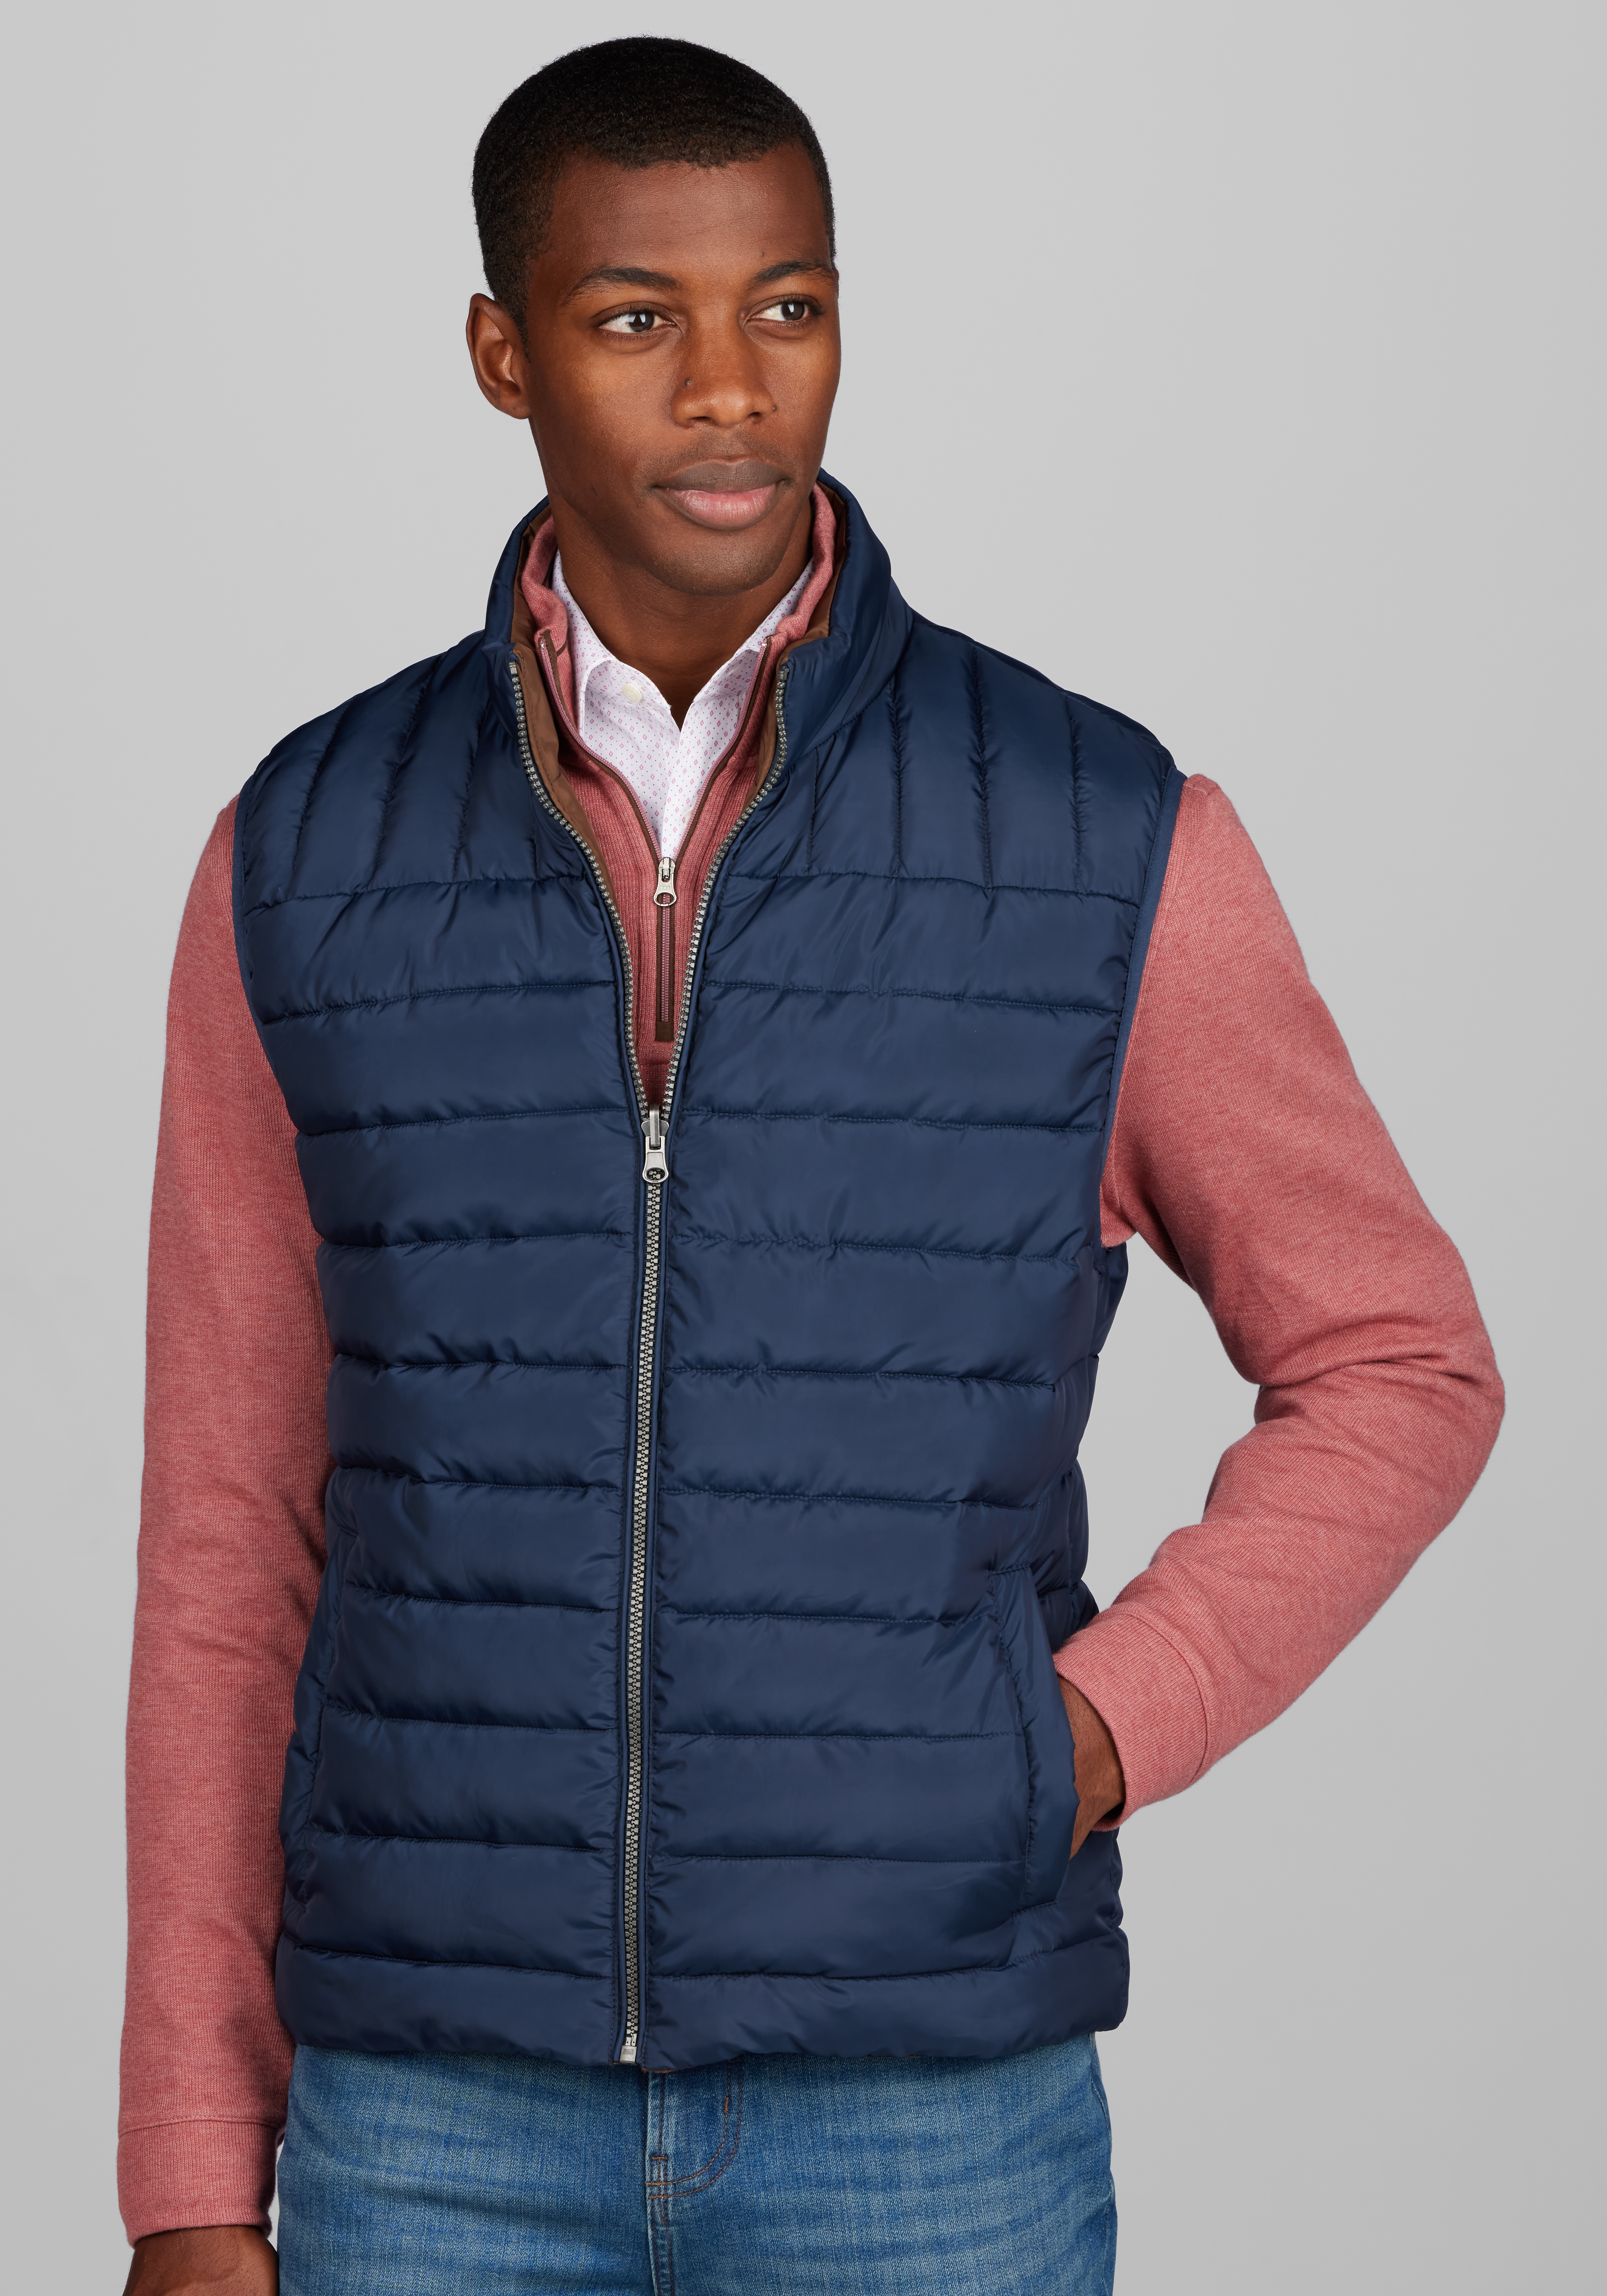 Men's Outerwear, Coats & Jackets | Men's Outerwear | JoS. A. Bank Clothiers